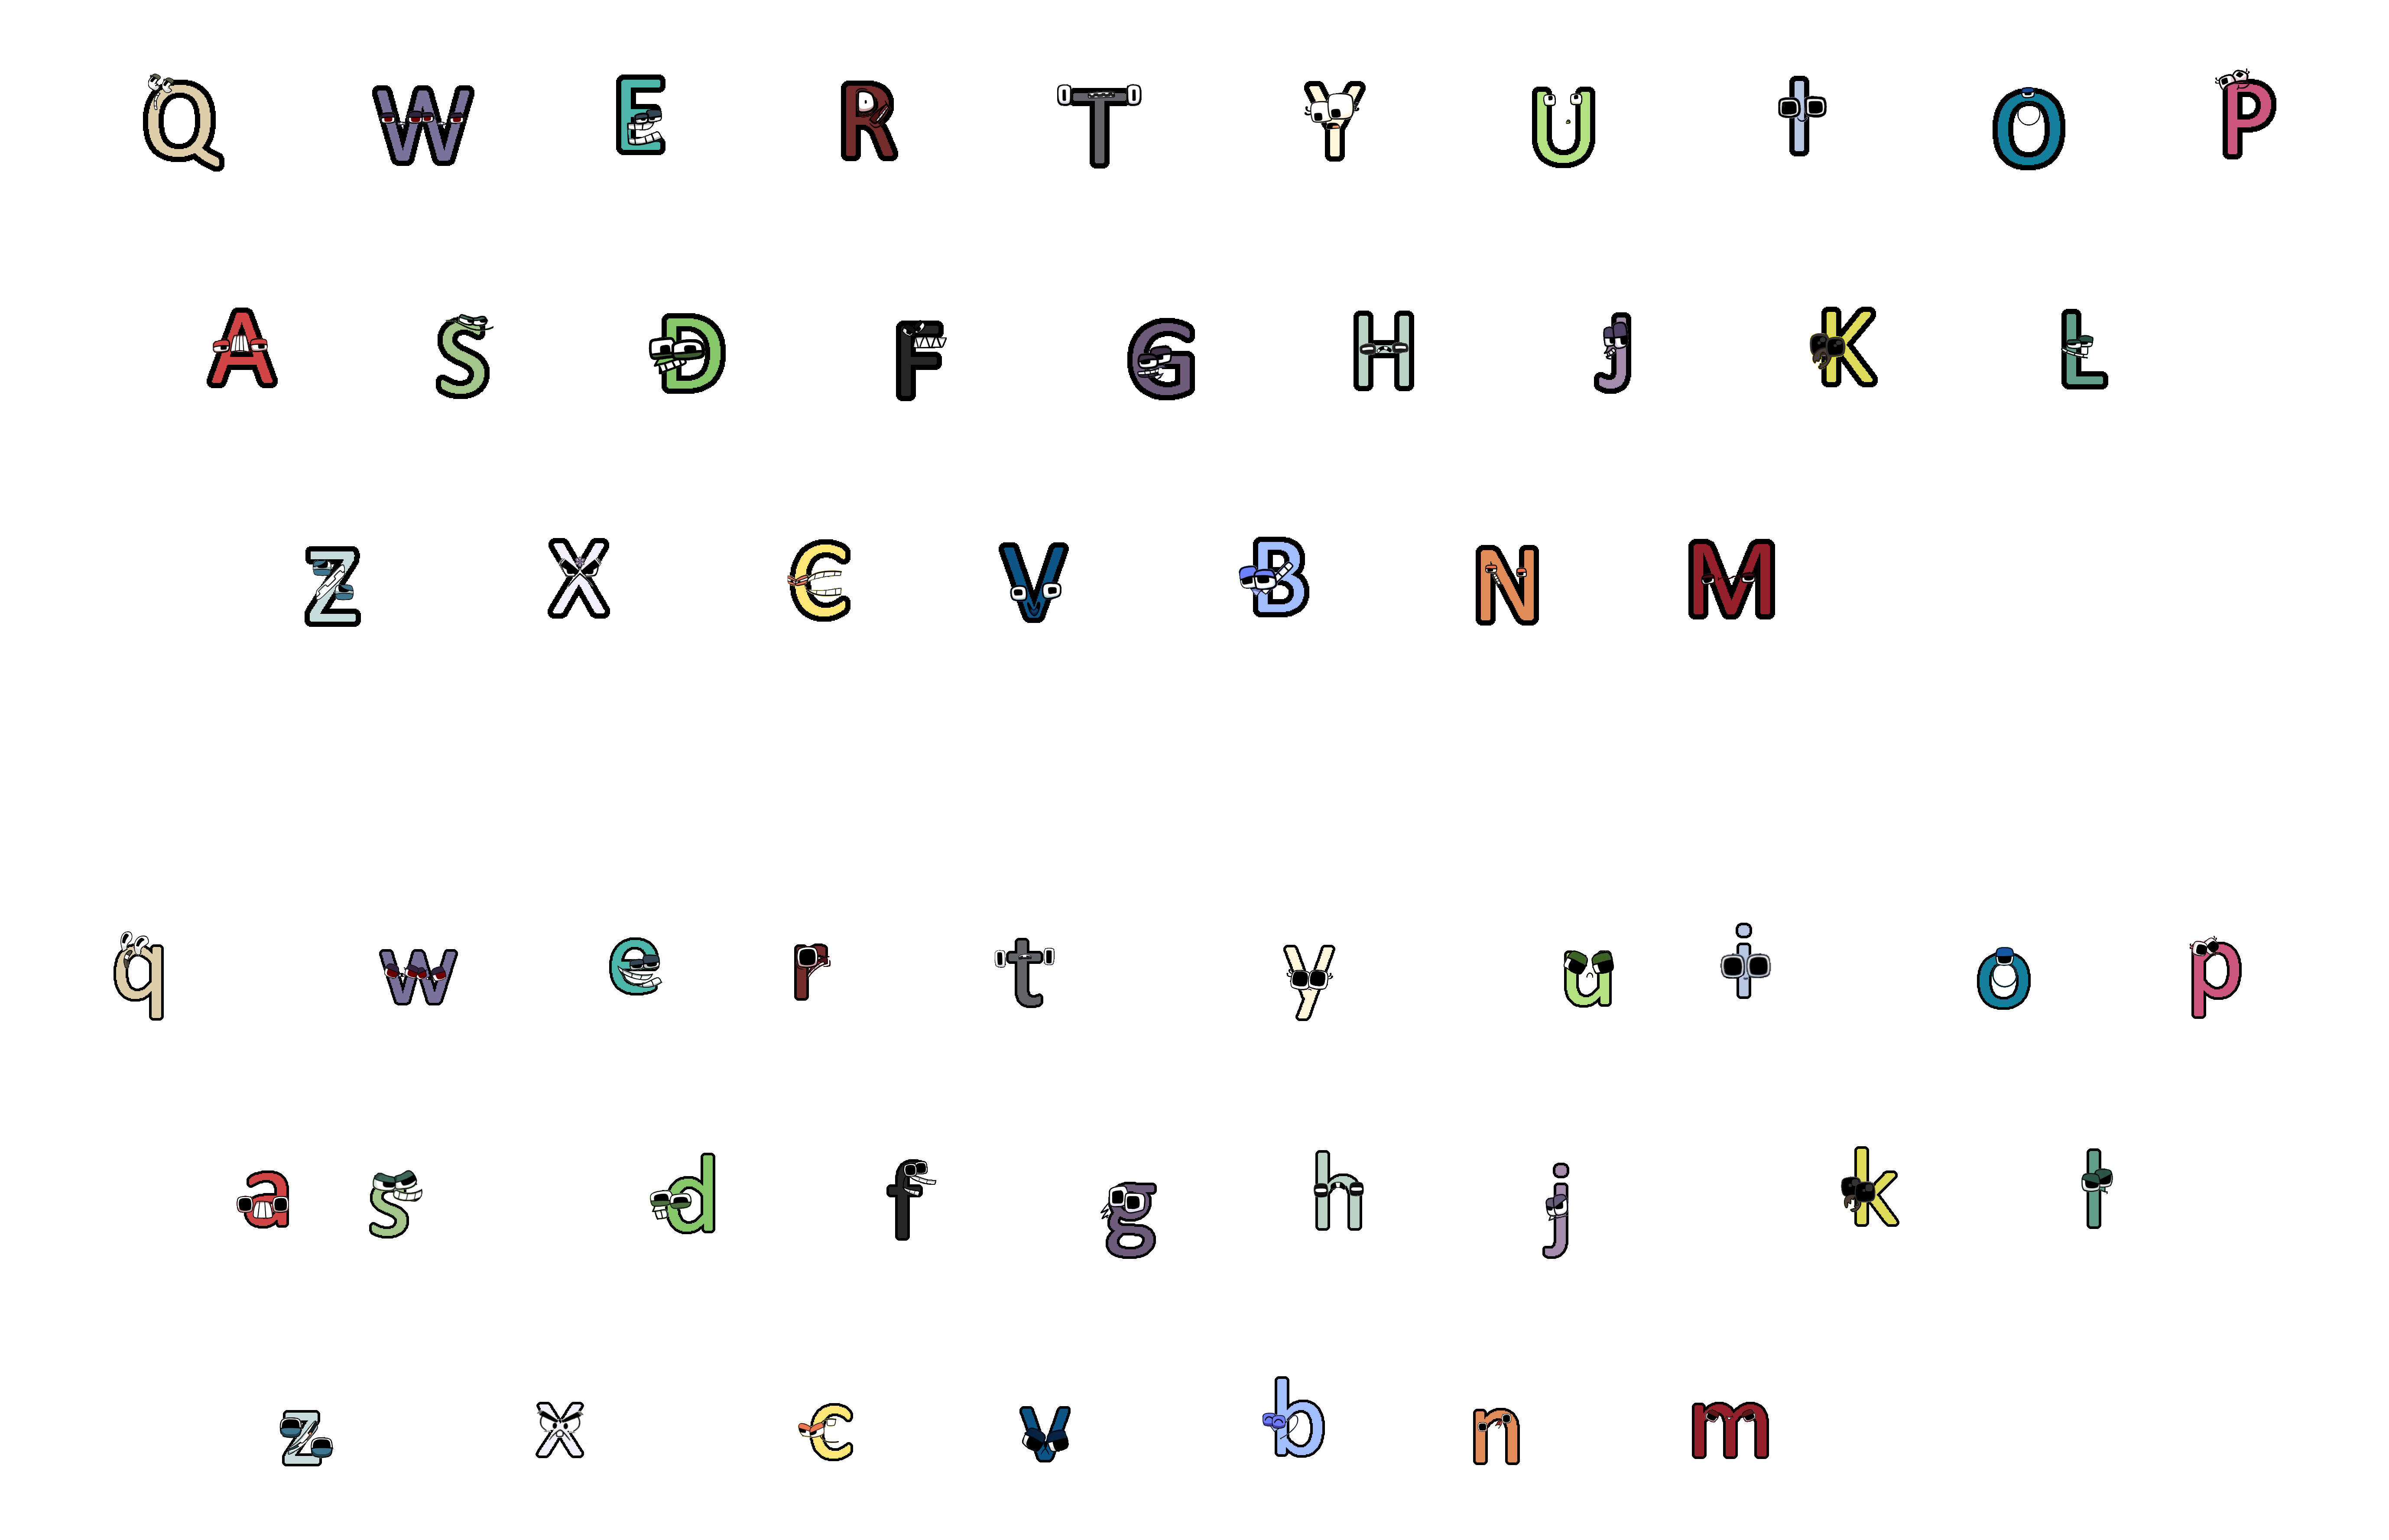 Alphabet Lore Keyboard by DustinTime2 on DeviantArt